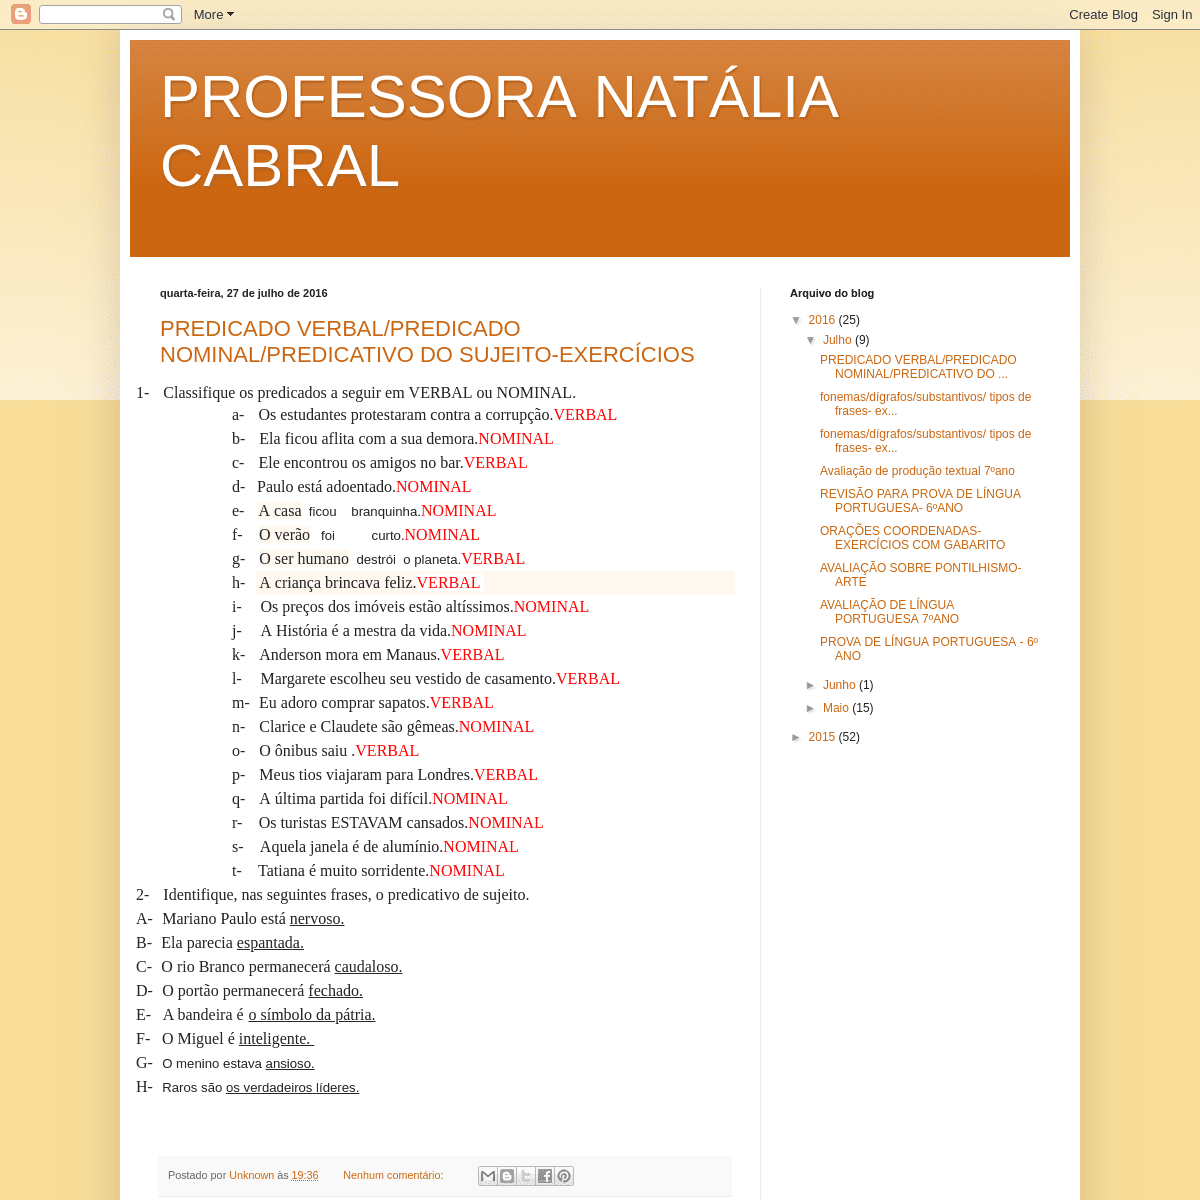 PROFESSORA NATÁLIA CABRAL